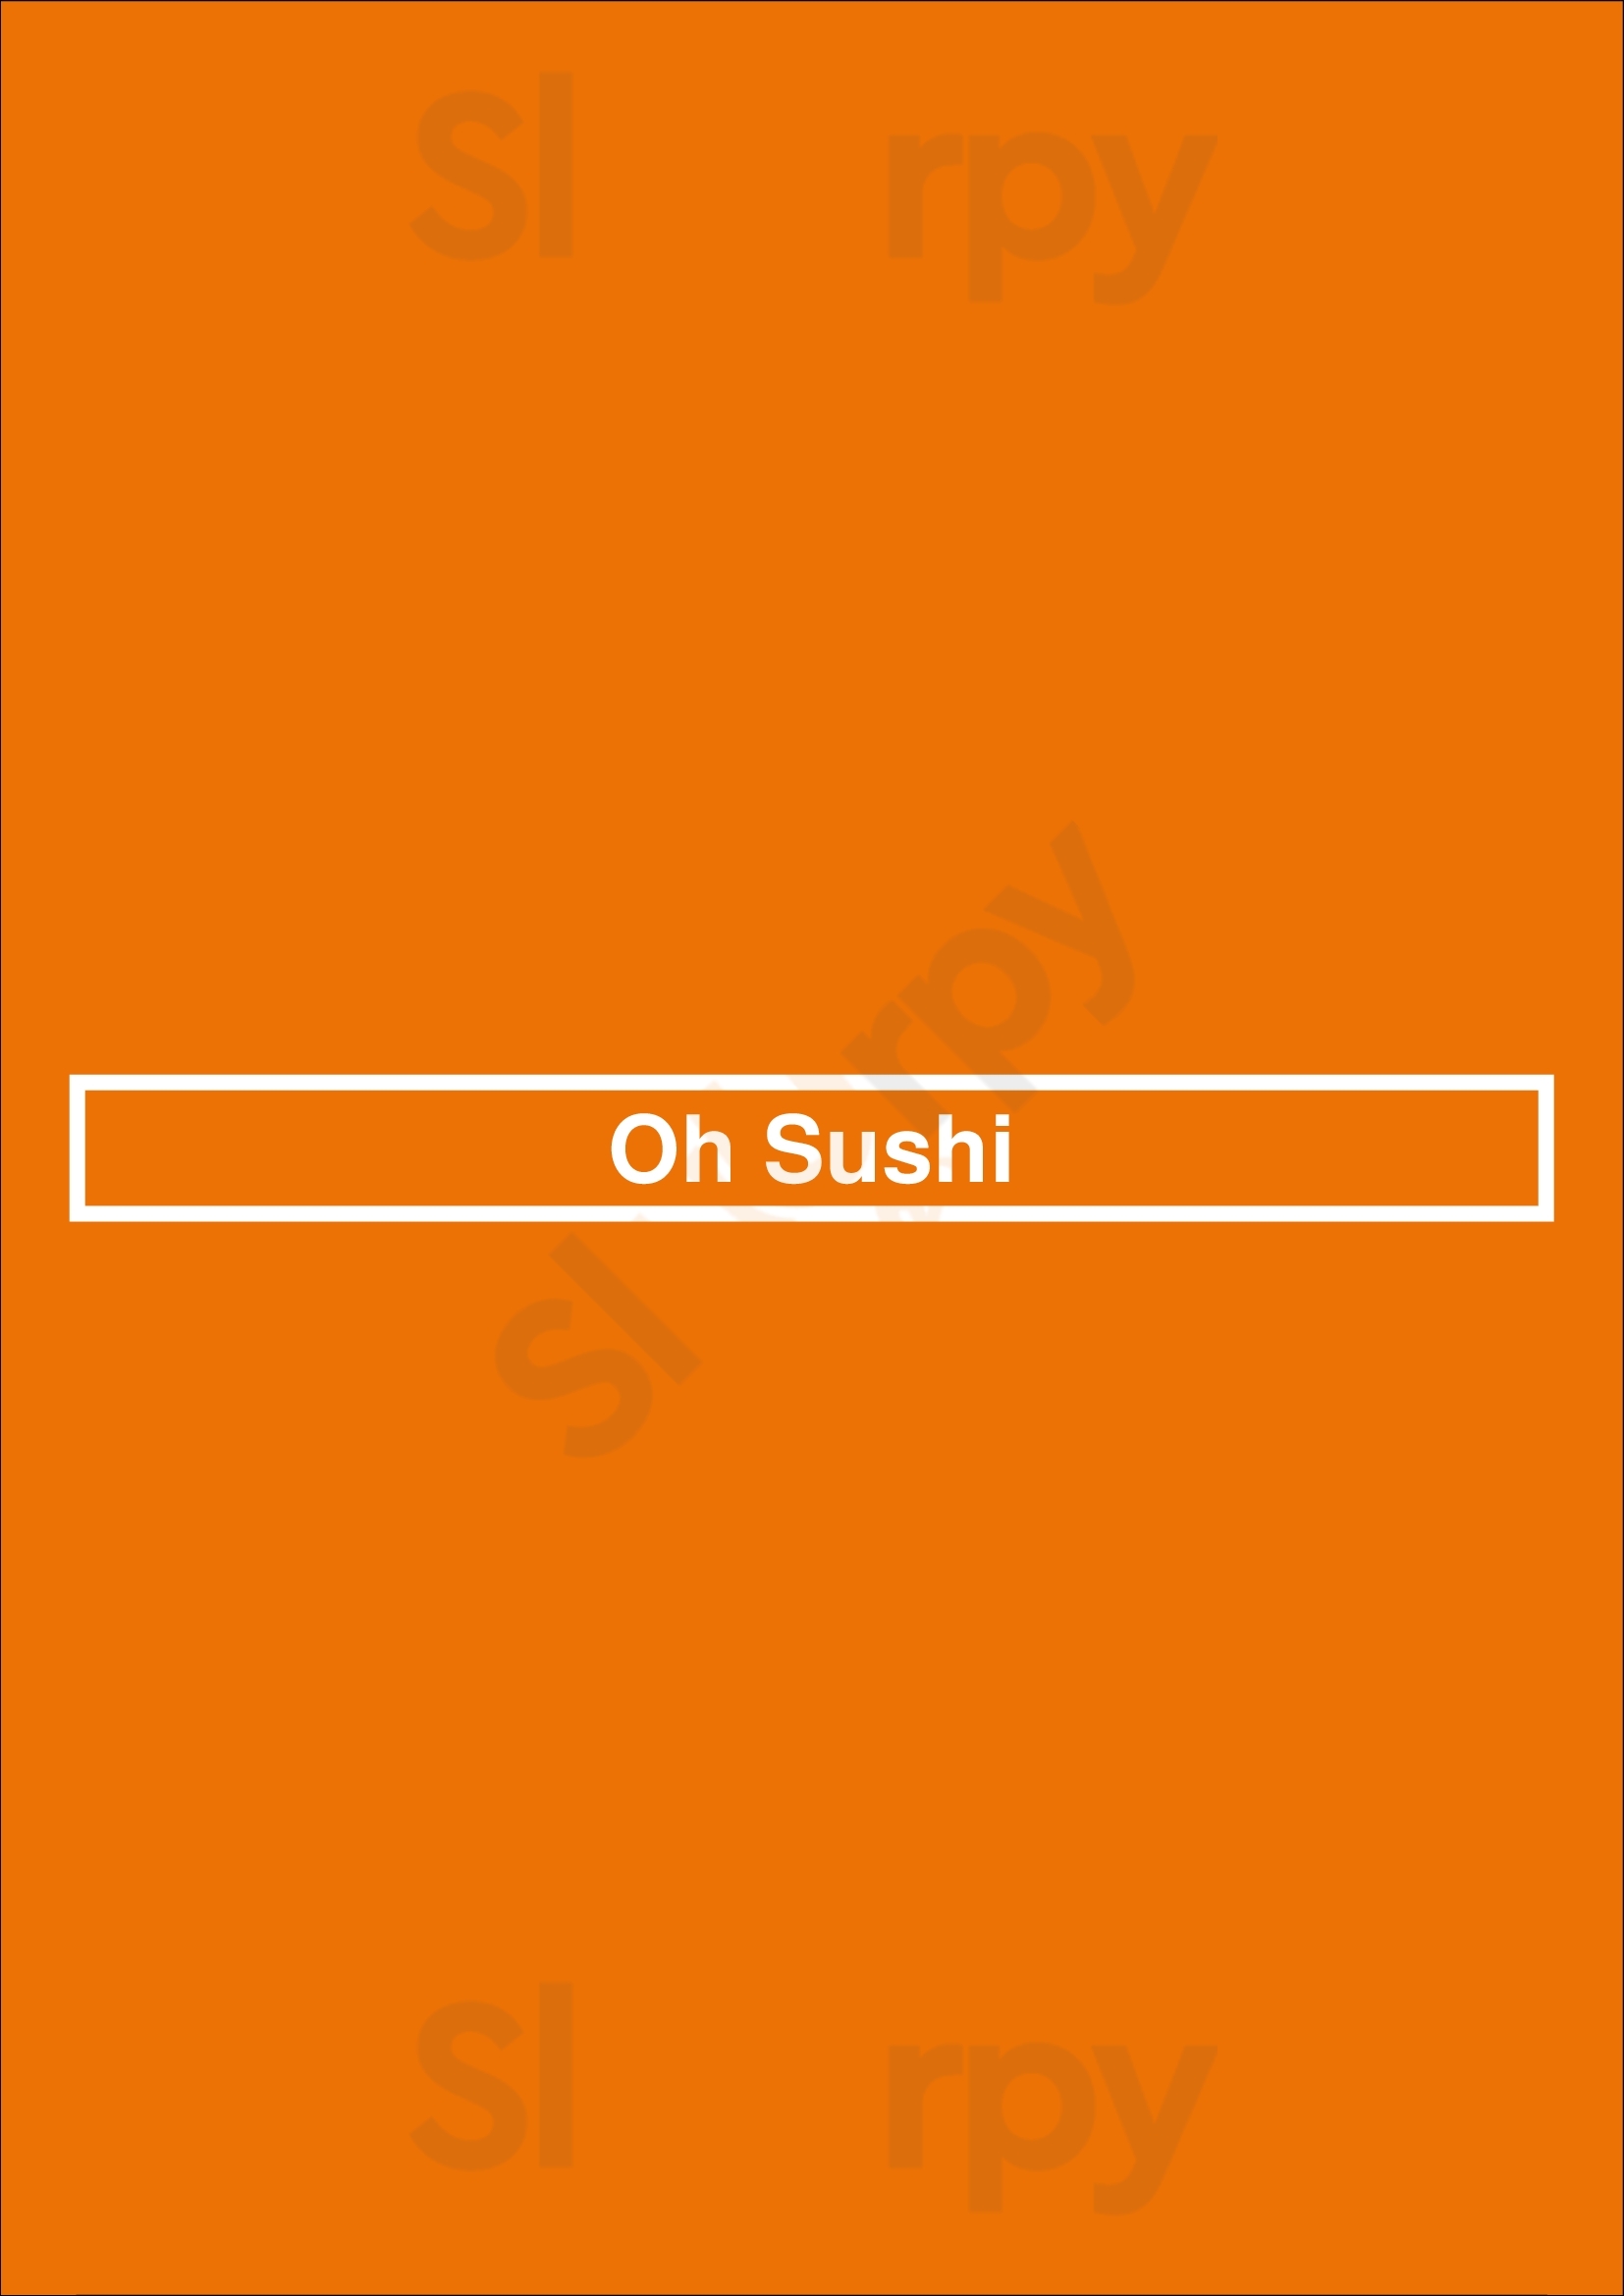 Oh Sushi Dallas Menu - 1